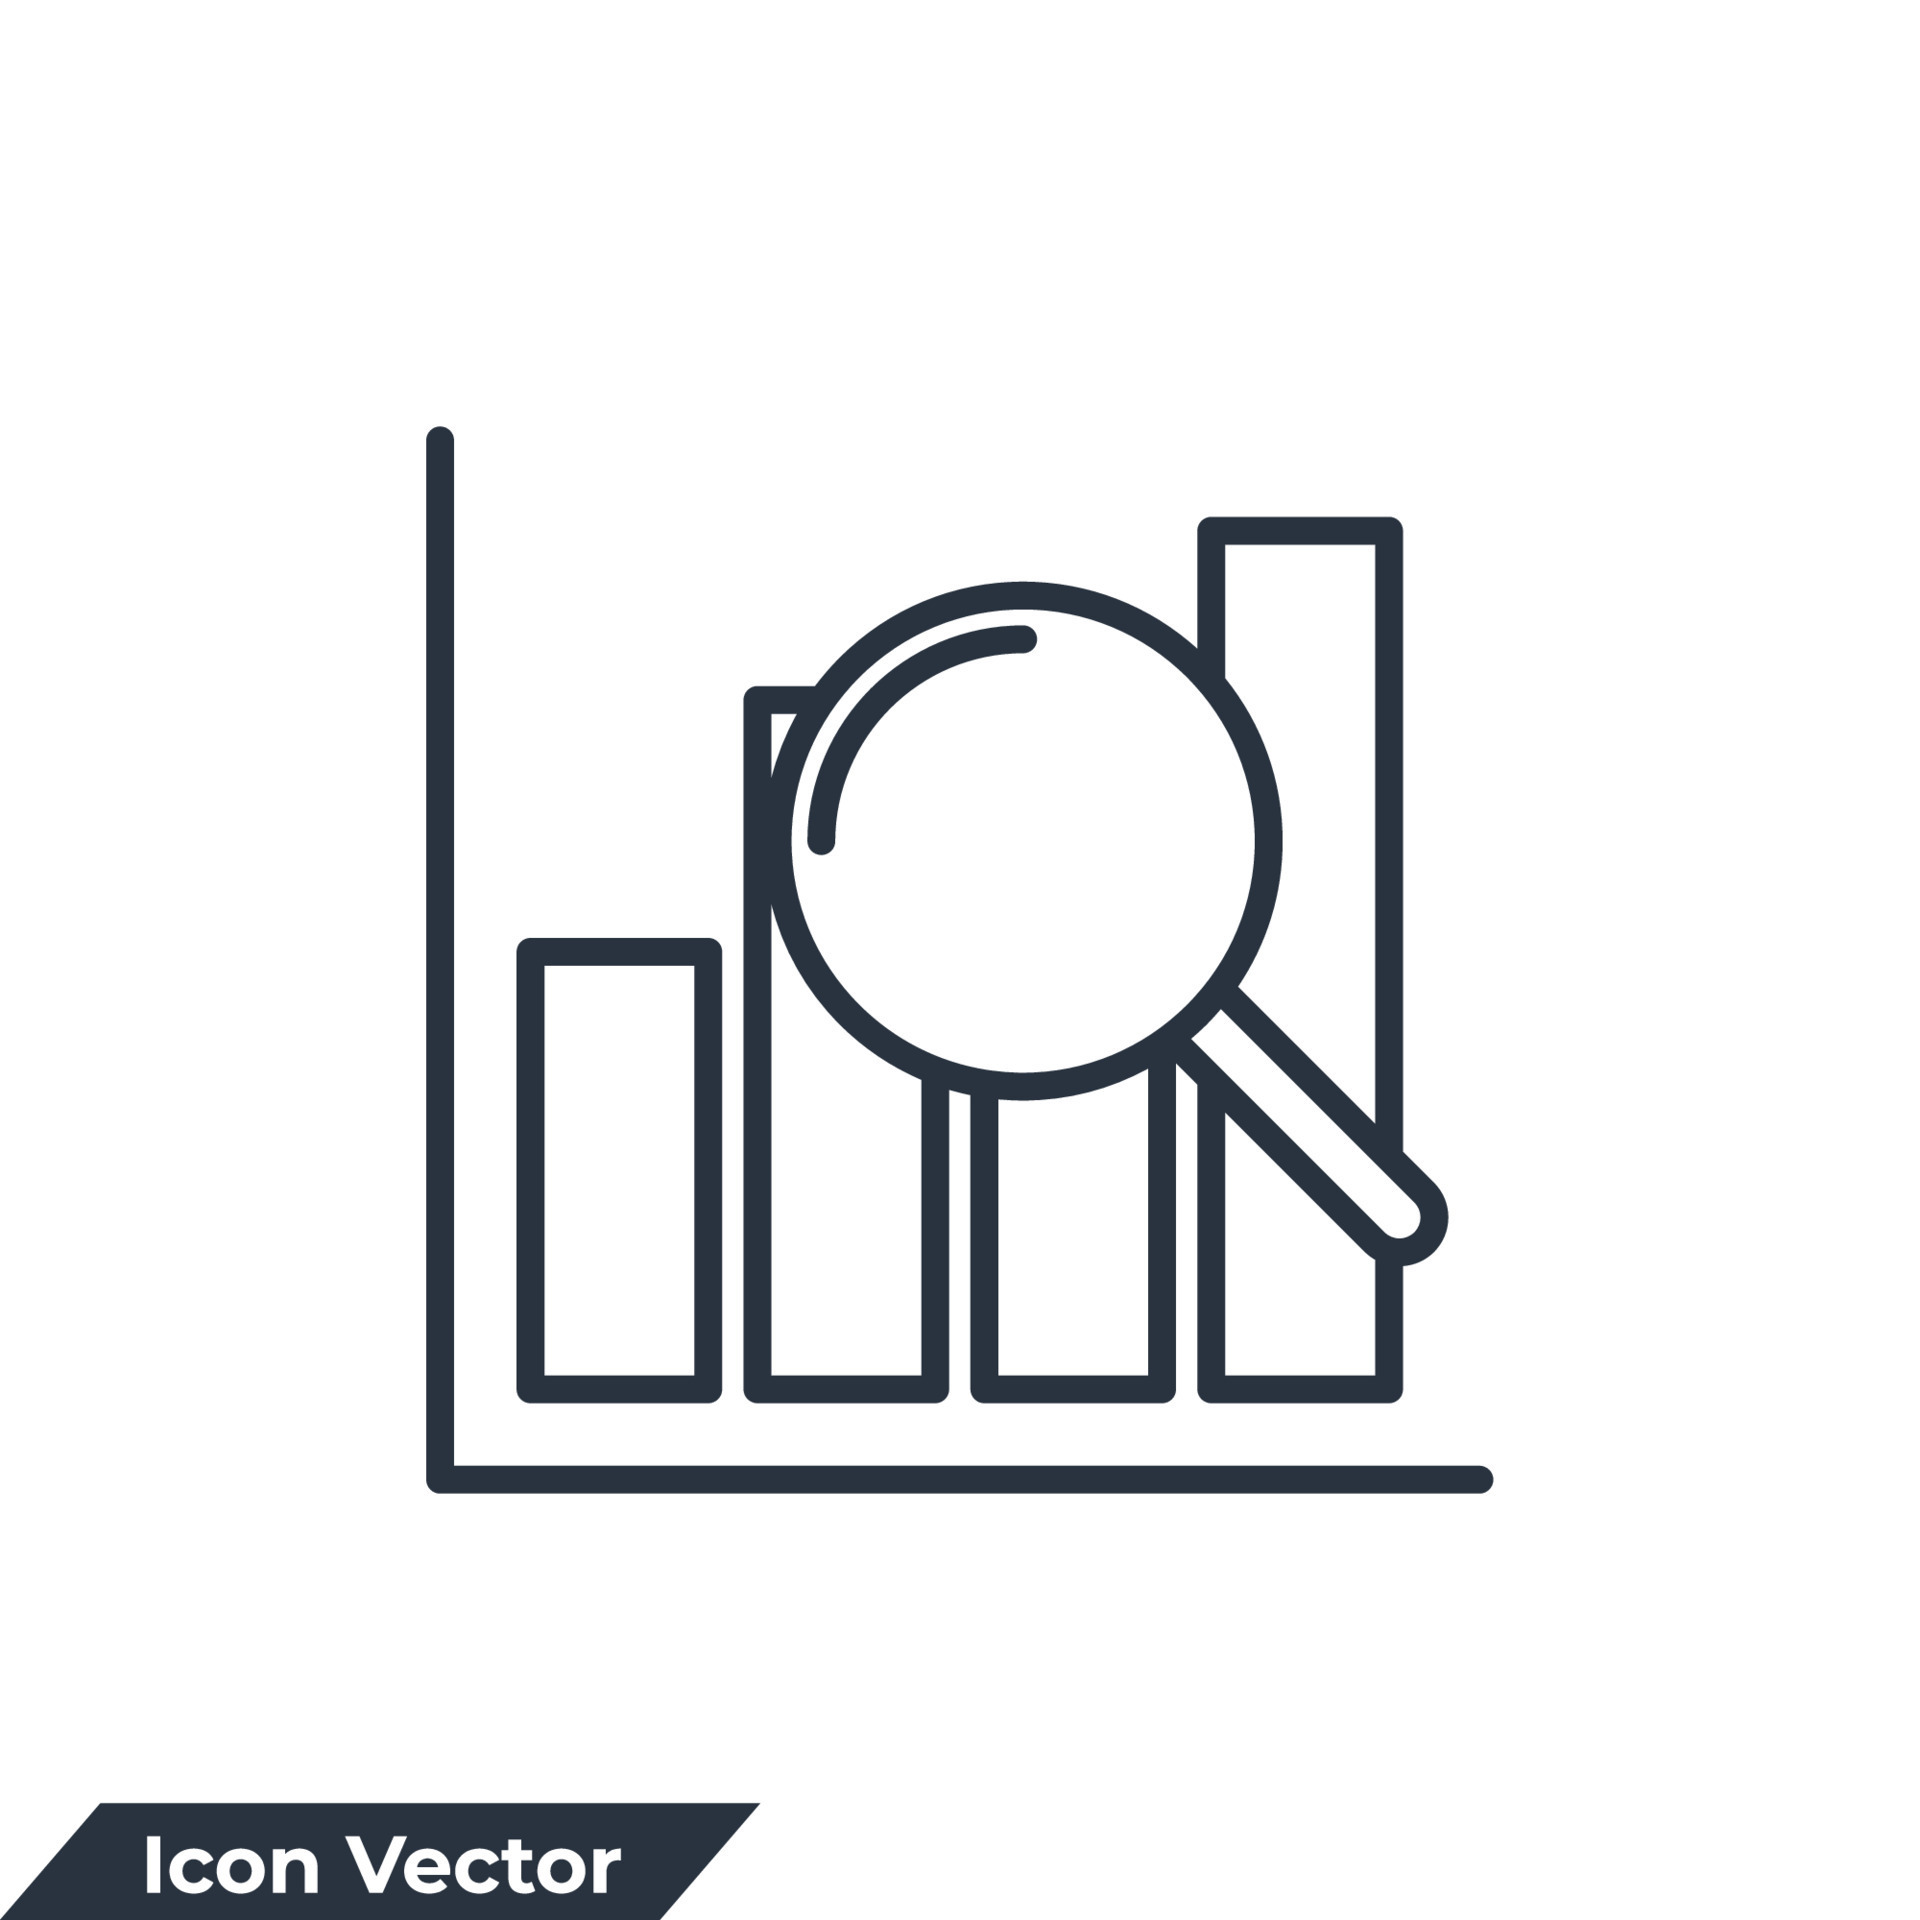 Analysis logo Vectors & Illustrations for Free Download | Freepik